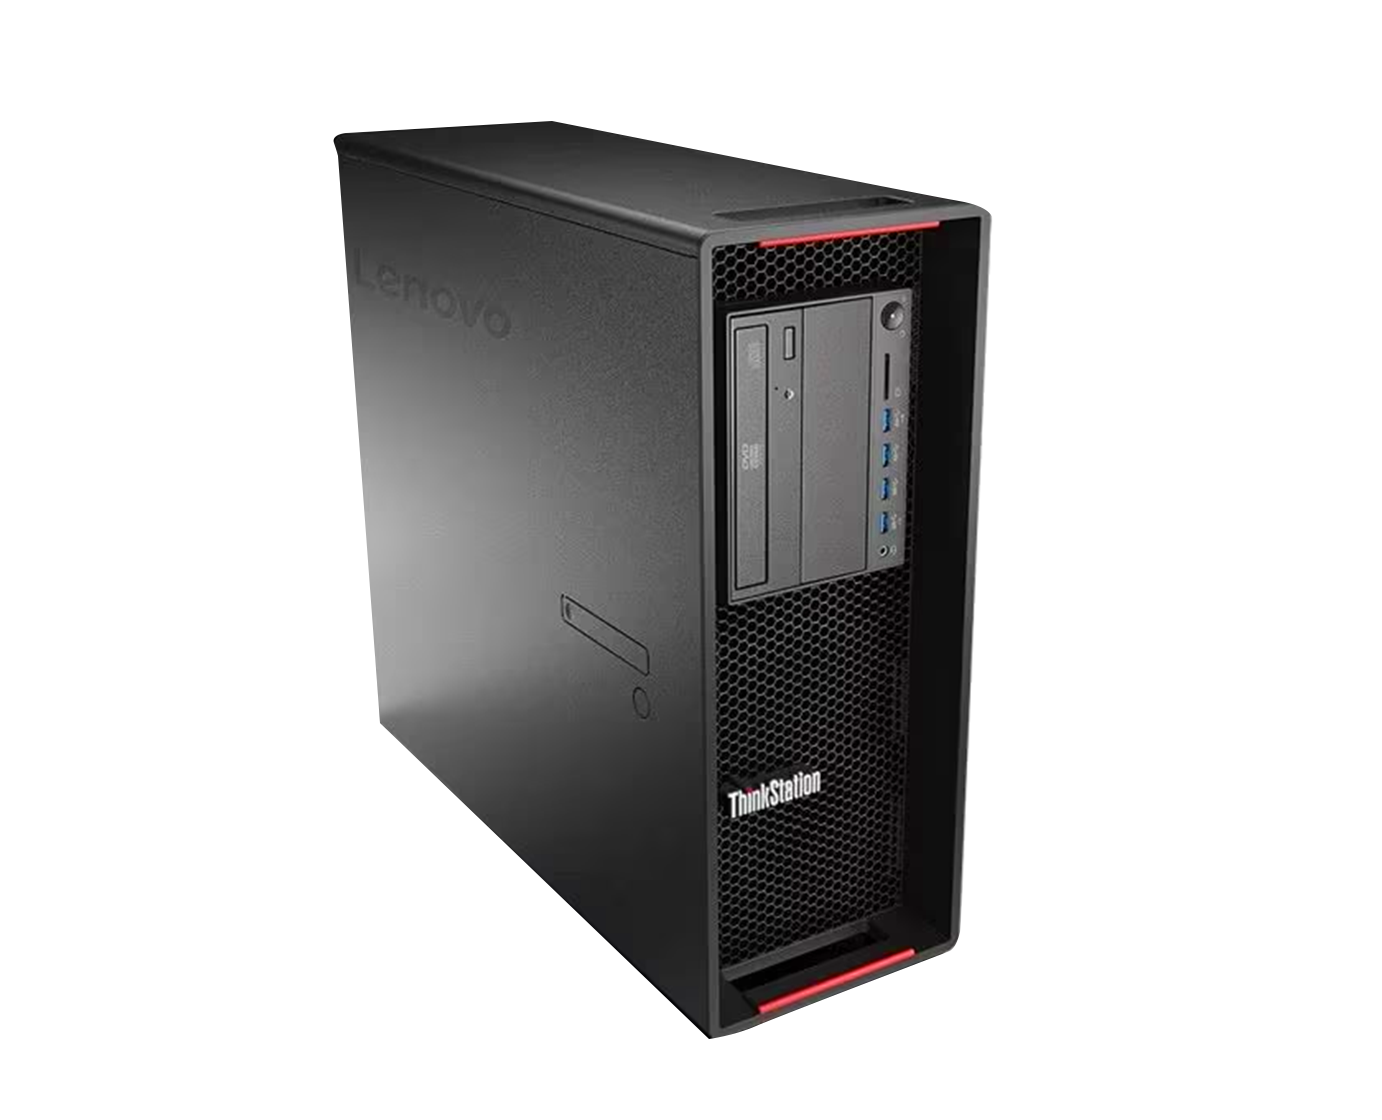 Lenovo Thinkstation P510 / Xeon E5 1603v4 2,8ghz / 16Gb ram / 256Gb ssd+ 500Gb / Nvidia k2000 2Gb / Win 10 Pro ¡Ex-demo!